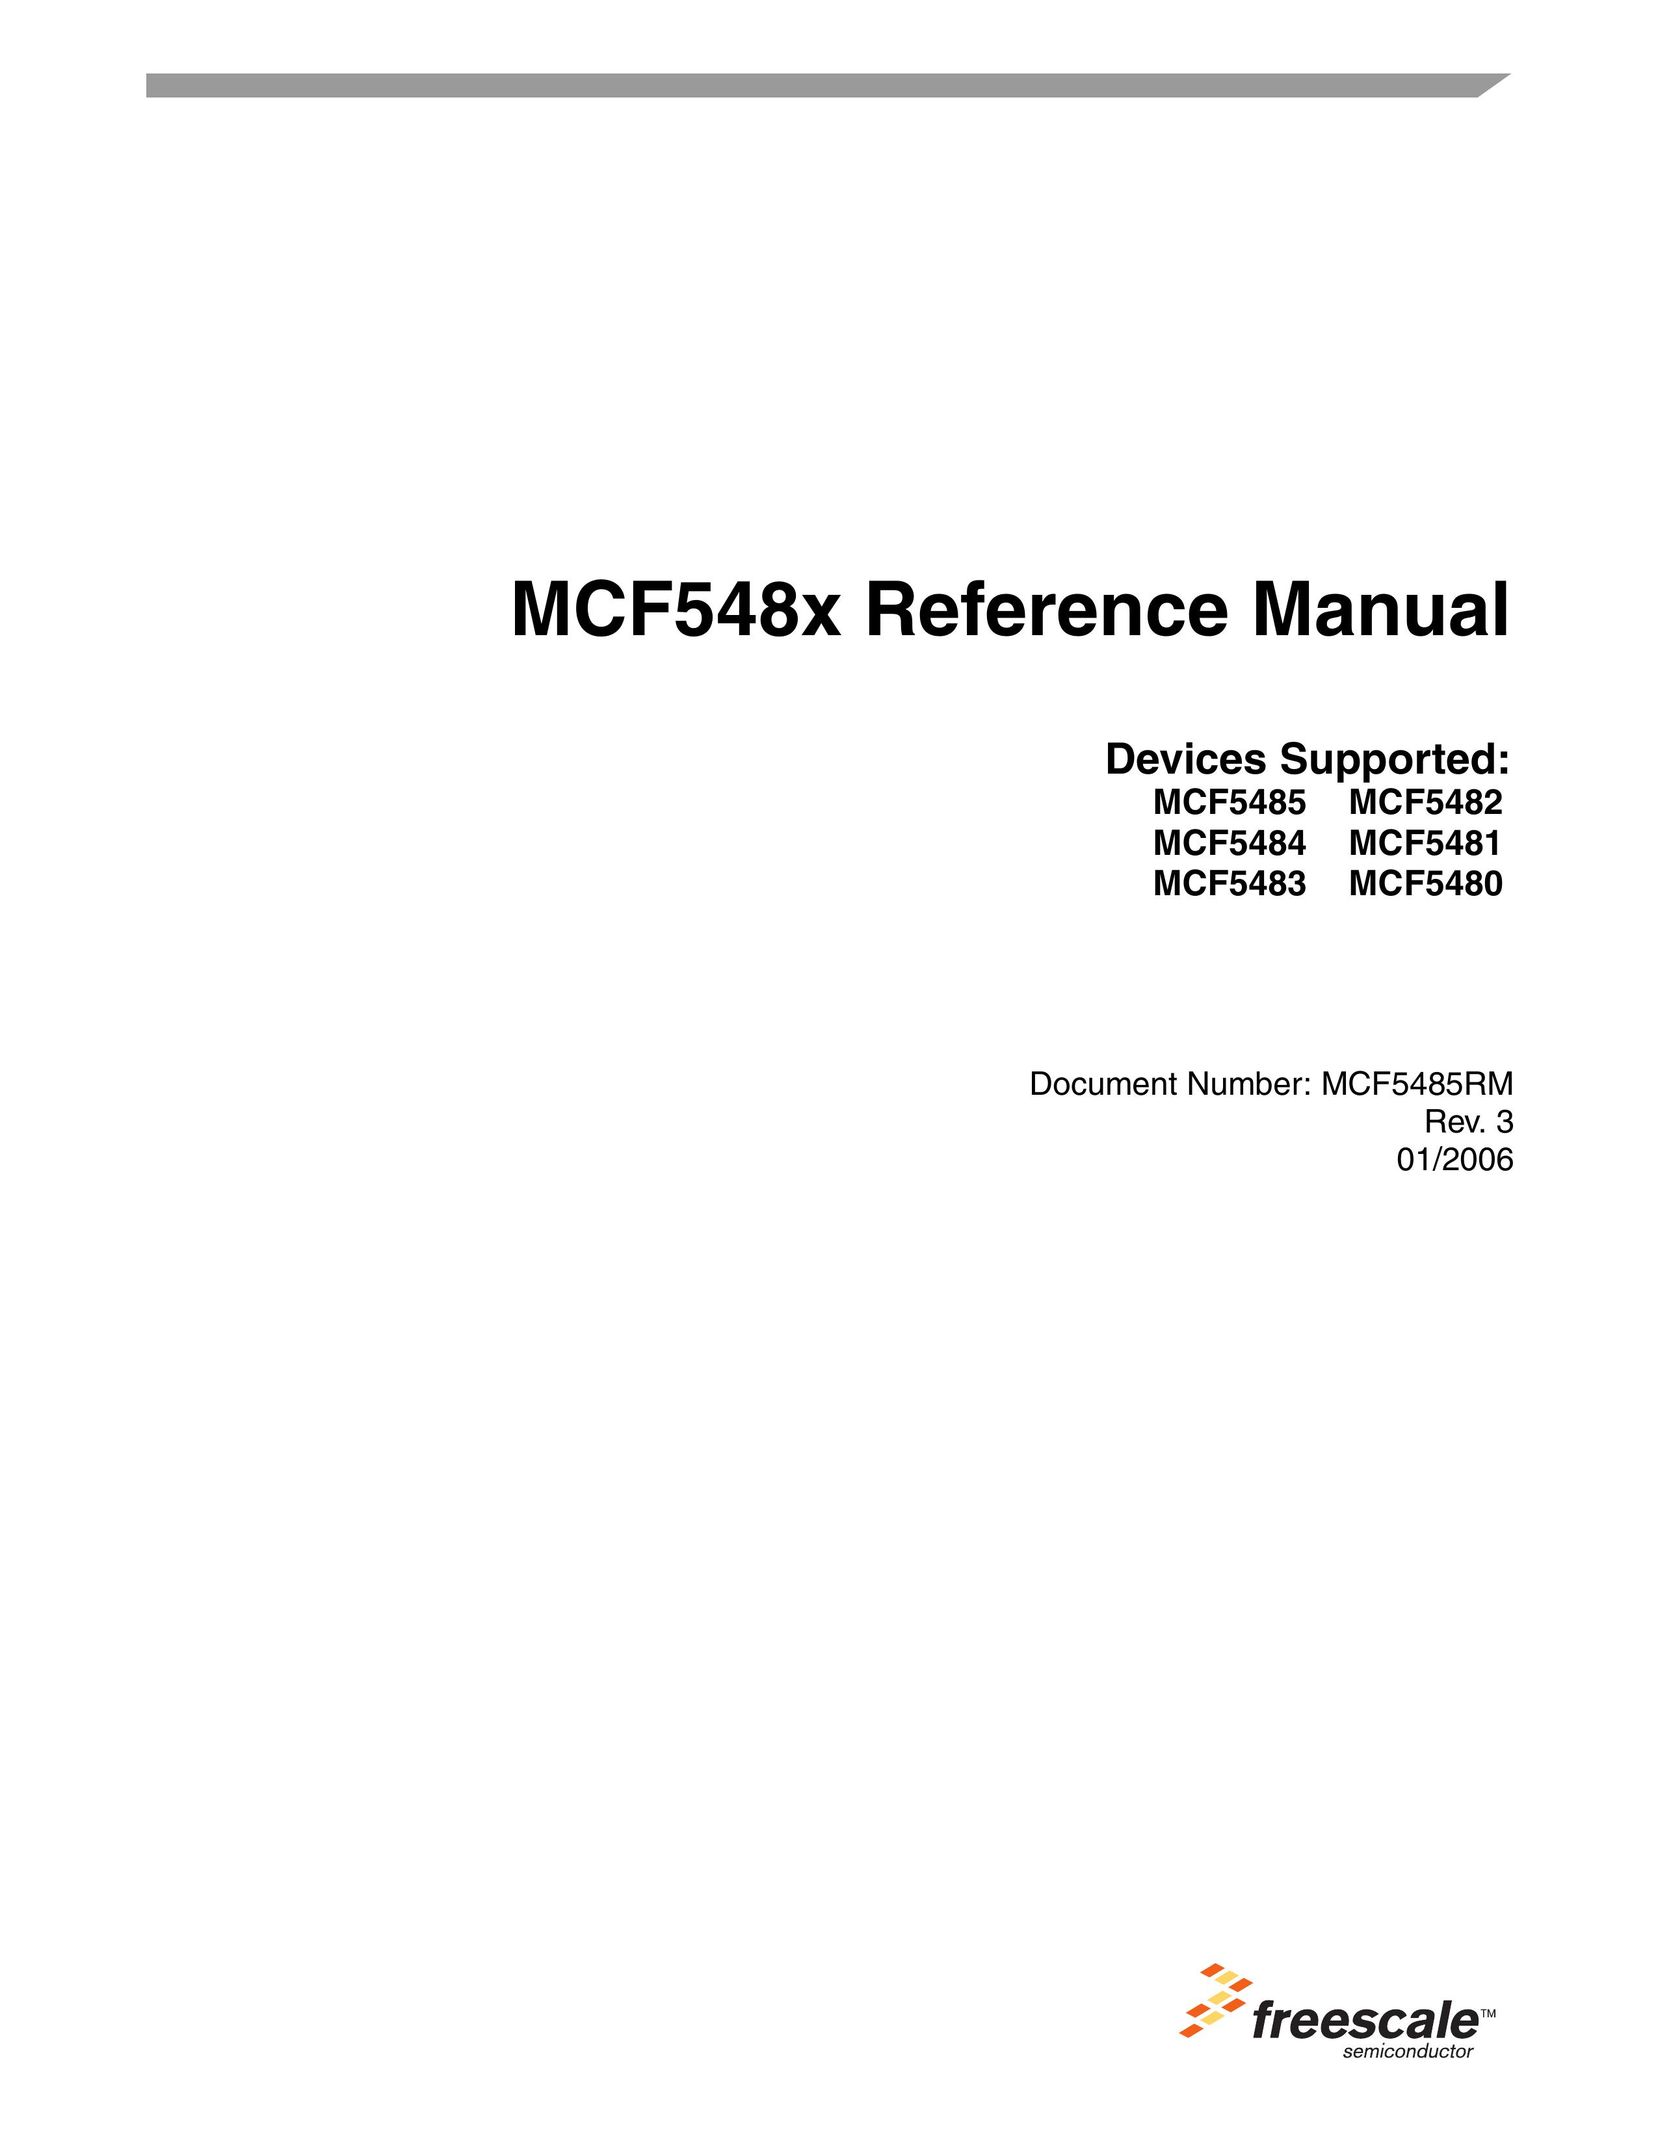 Freescale Semiconductor MCF5481 Computer Hardware User Manual